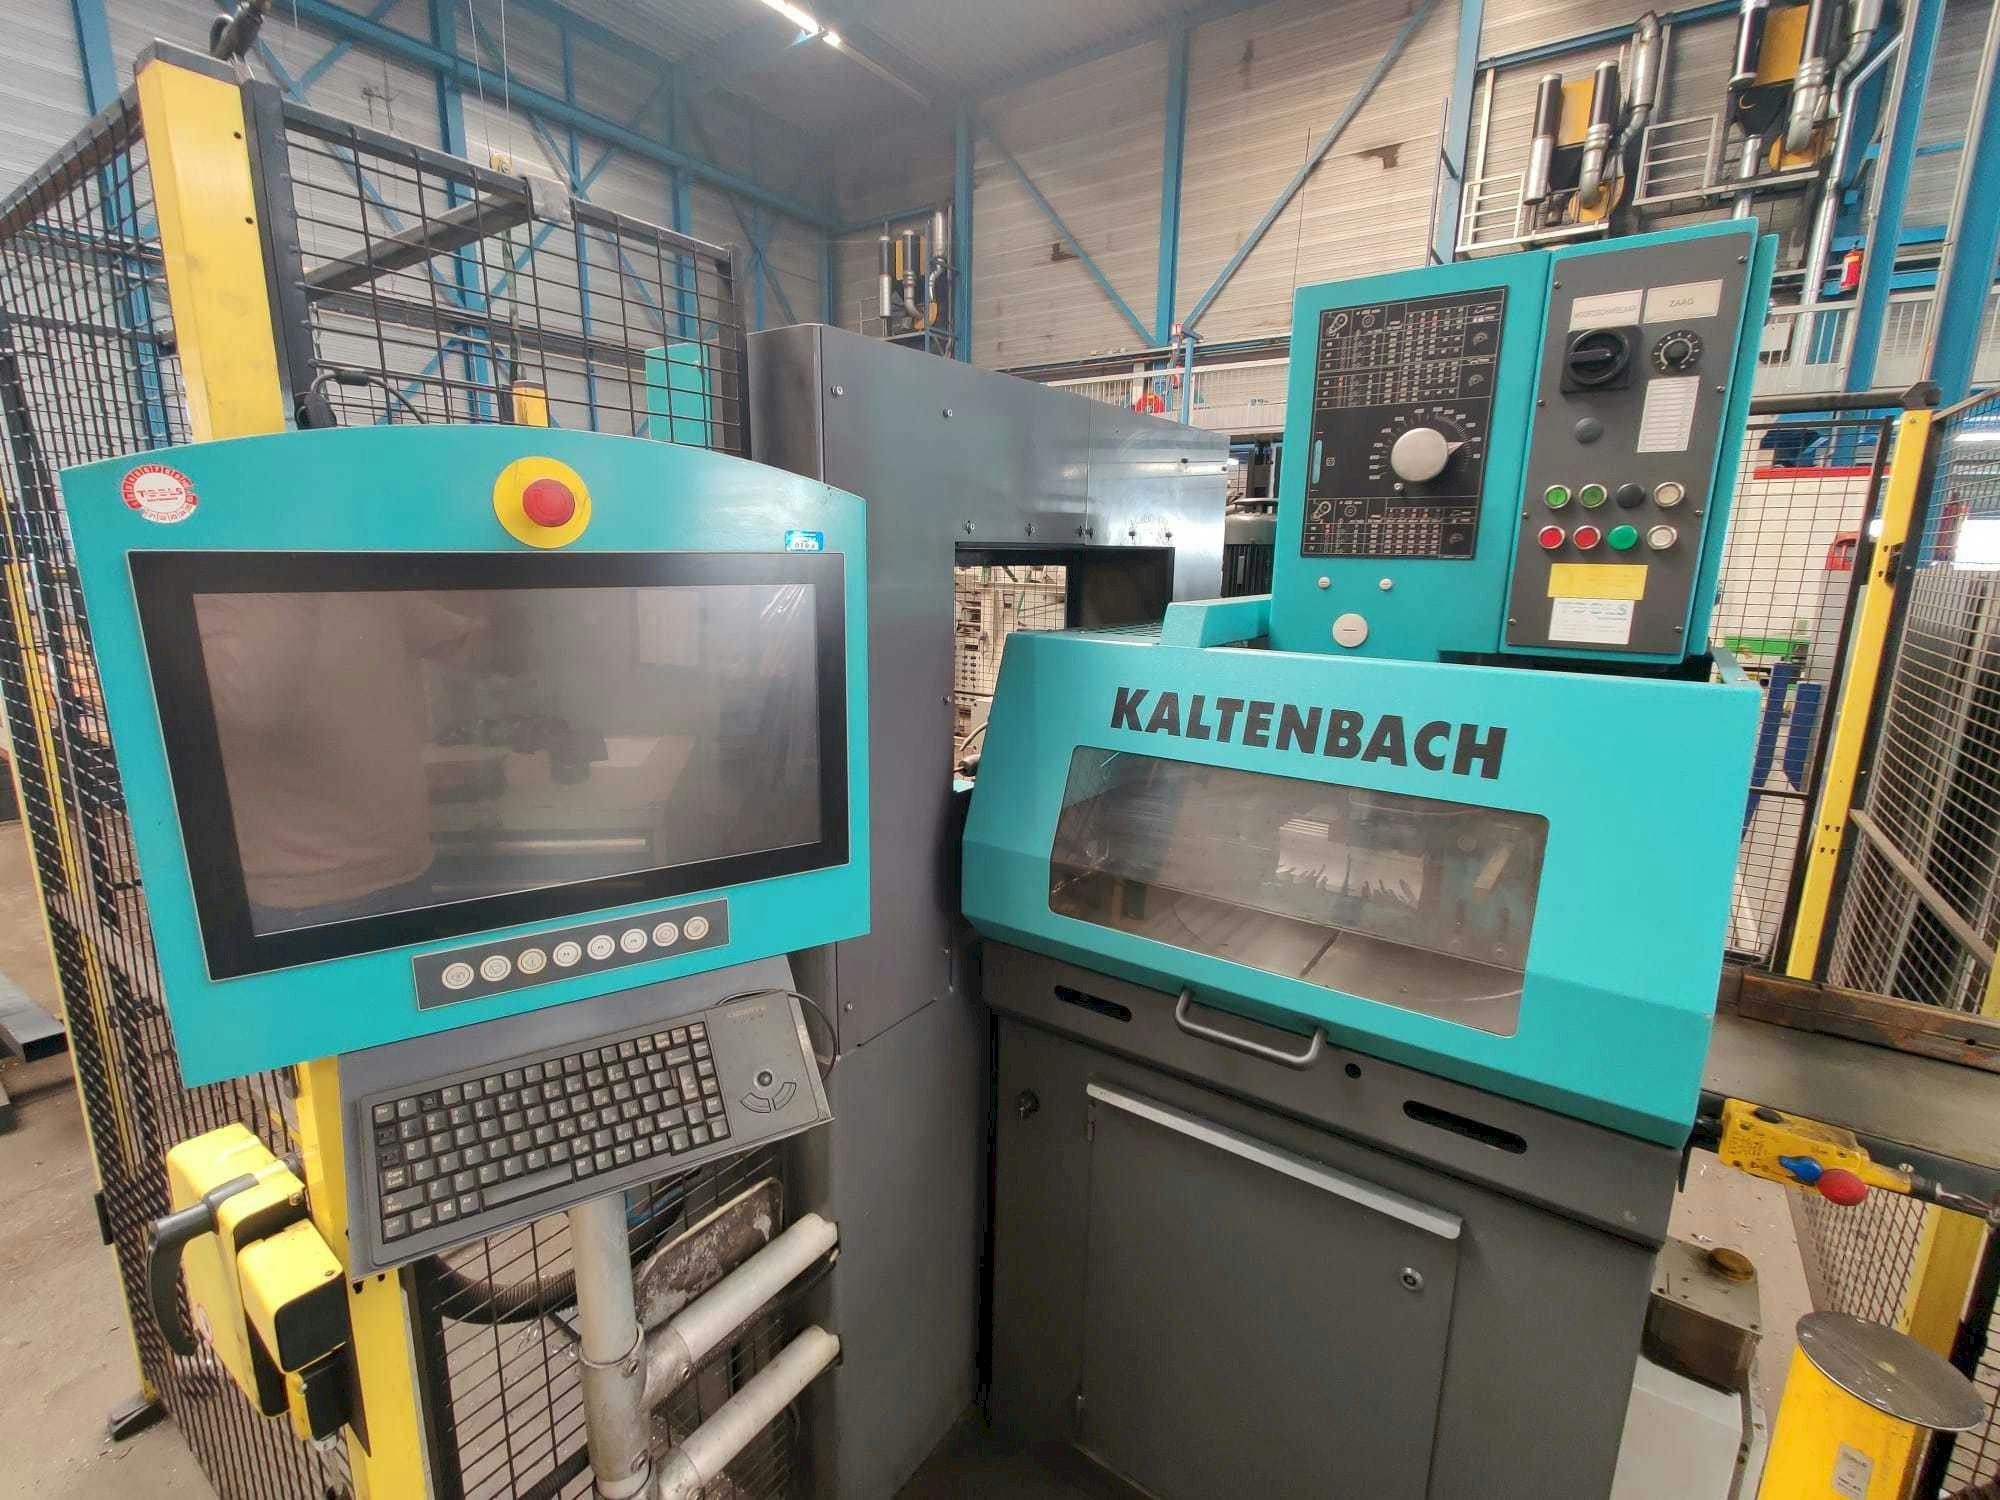 Vista frontal de la máquina KALTENBACH KKS 450 + KBT 142